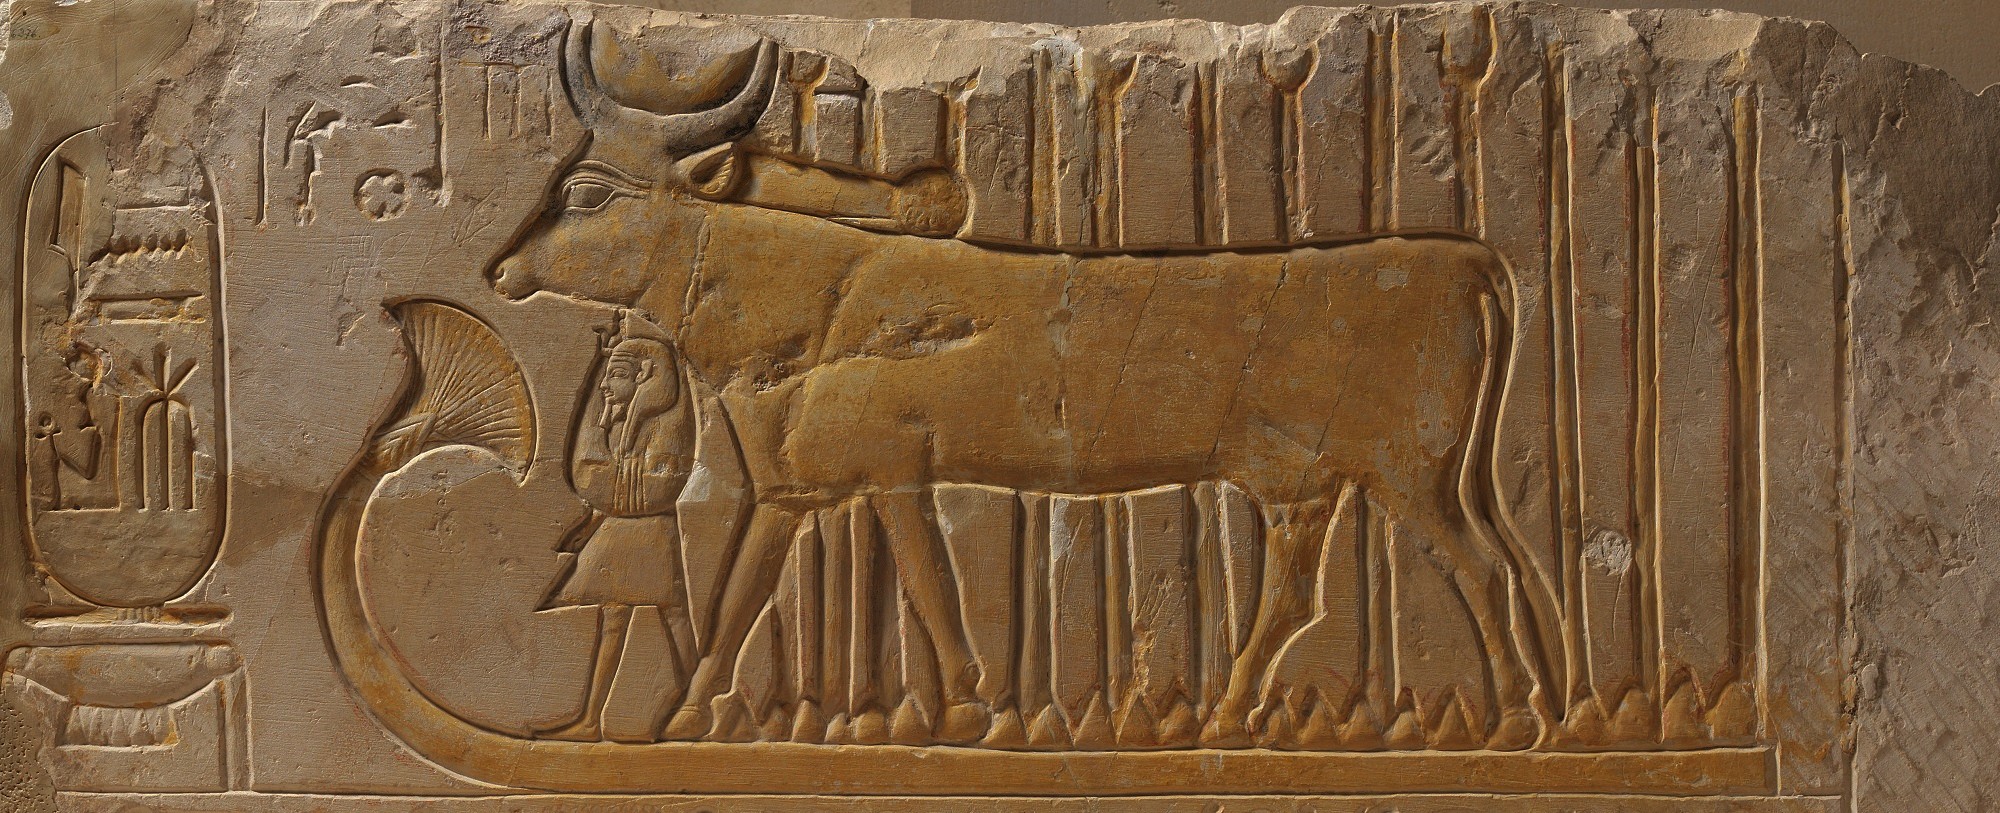 Relief mural Hathor